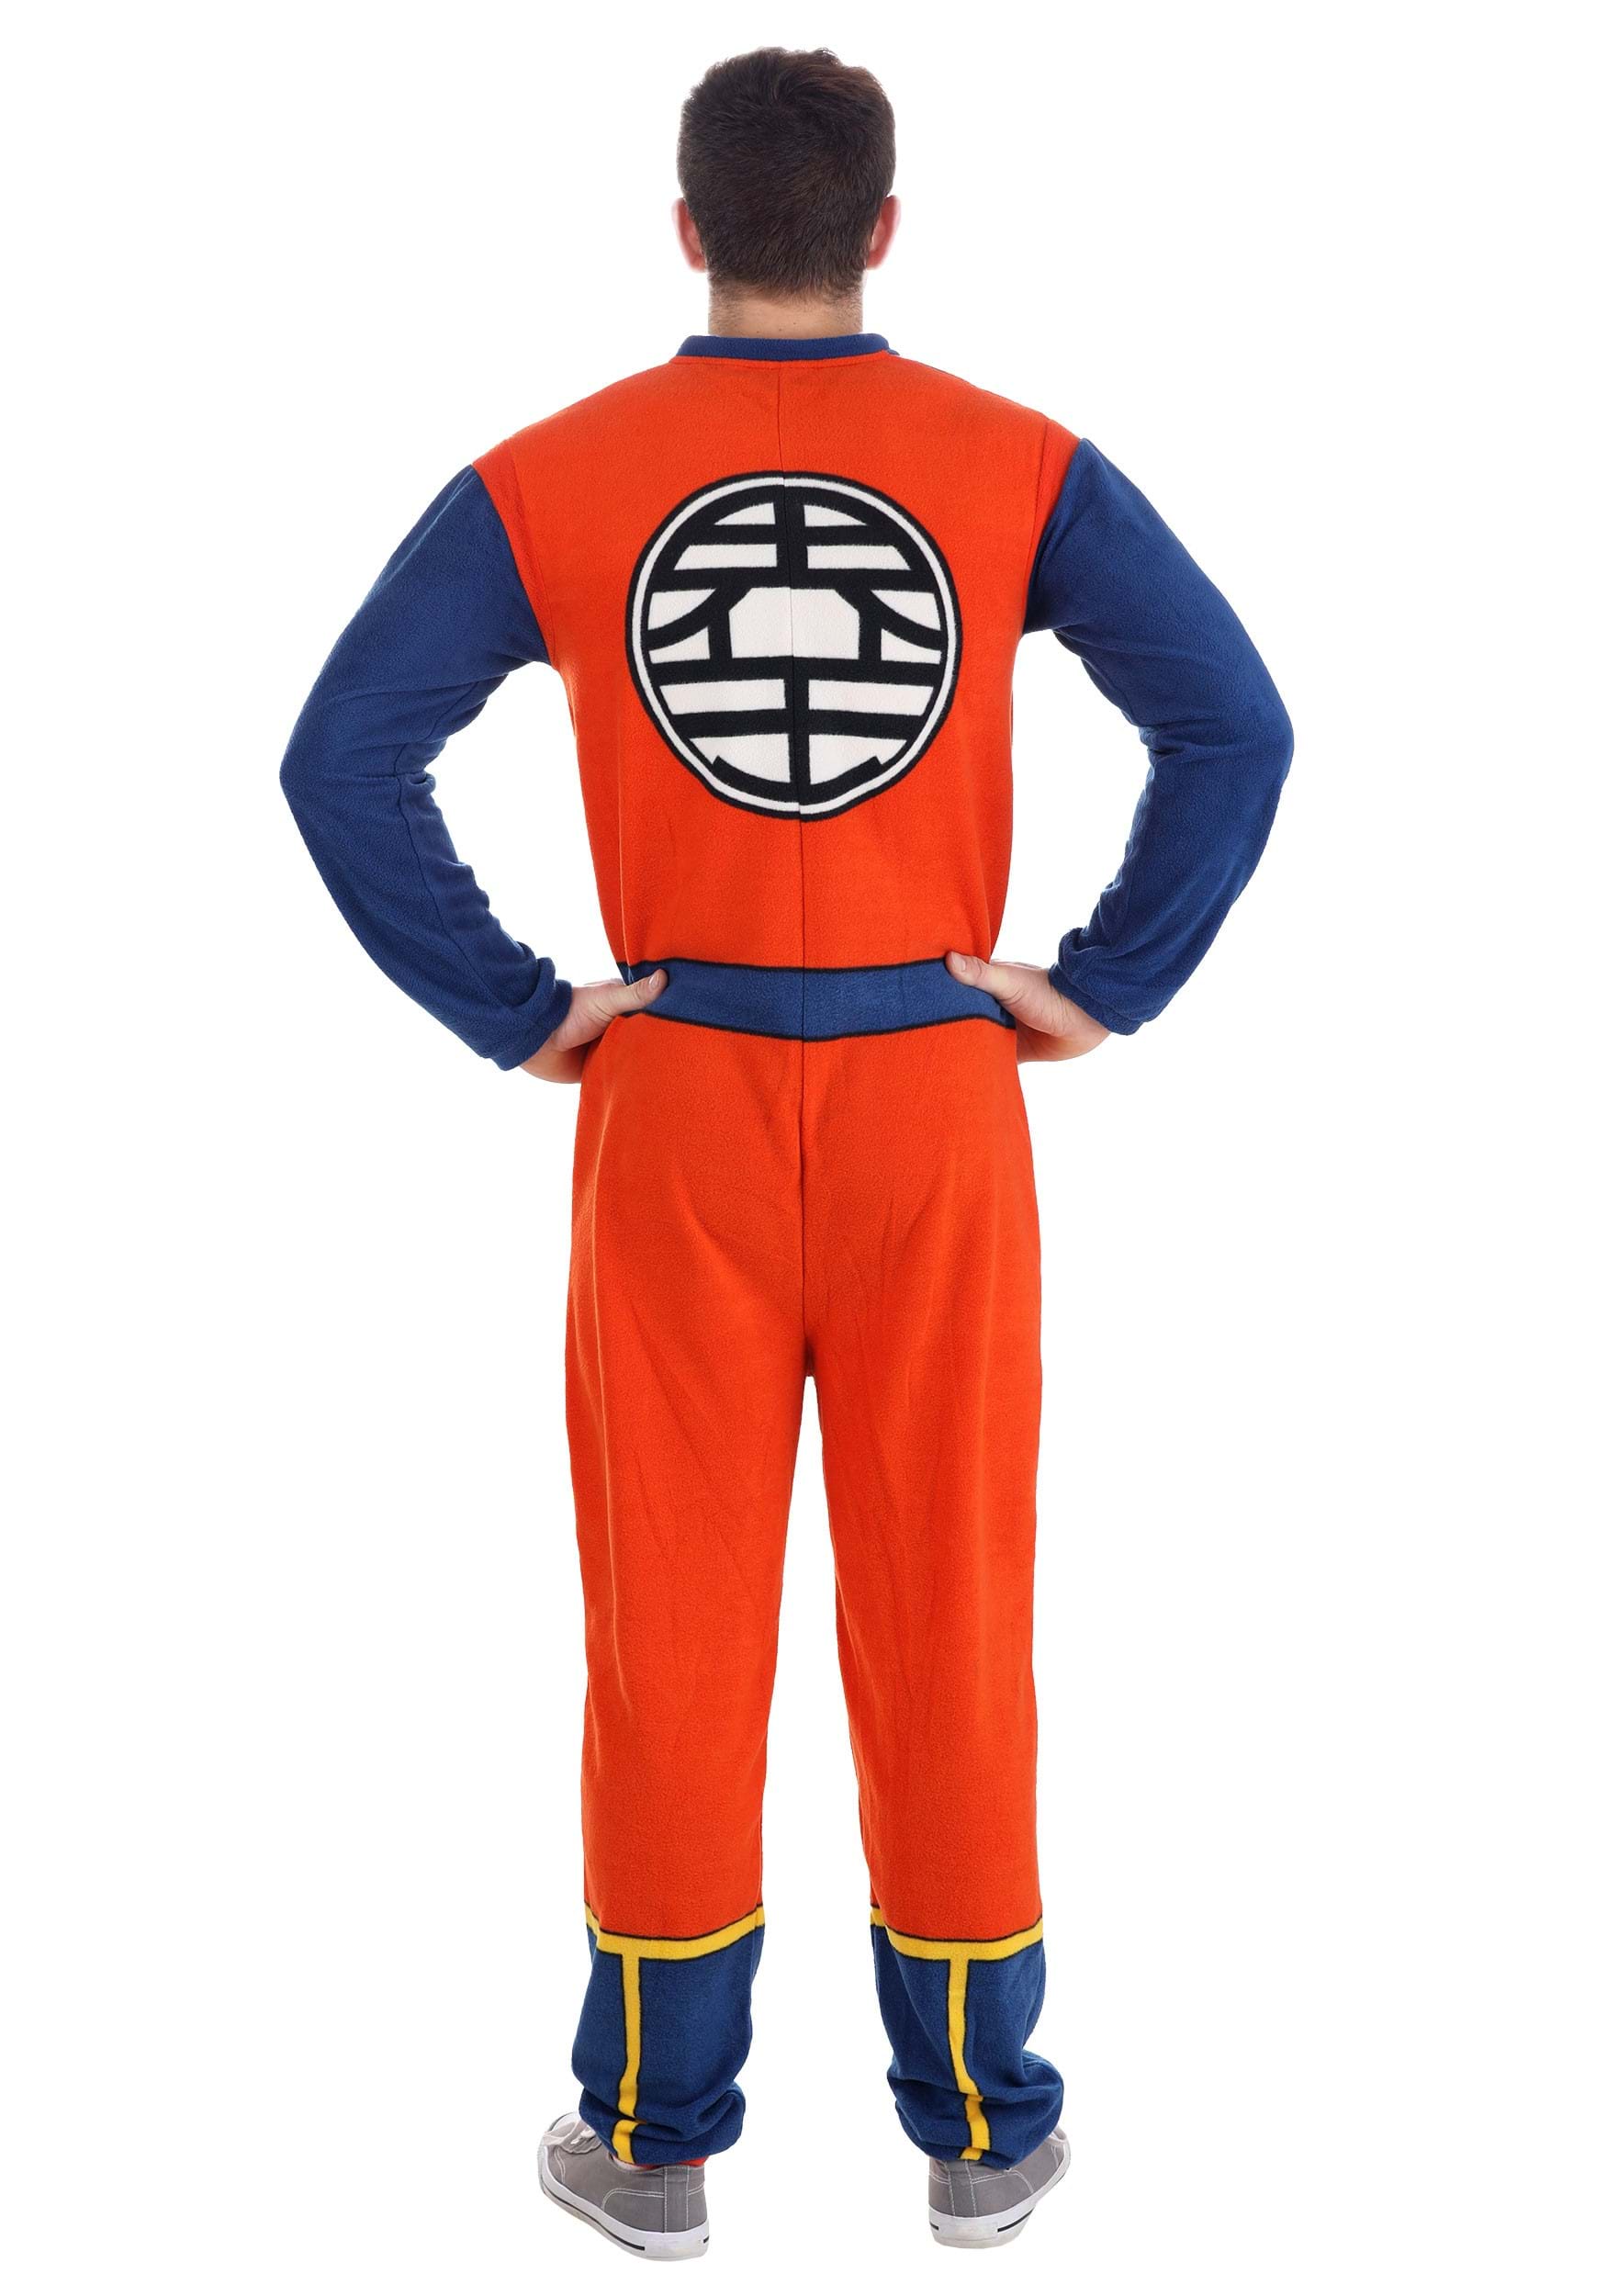 Dragon Ball Z Union Suit Sleepwear-M